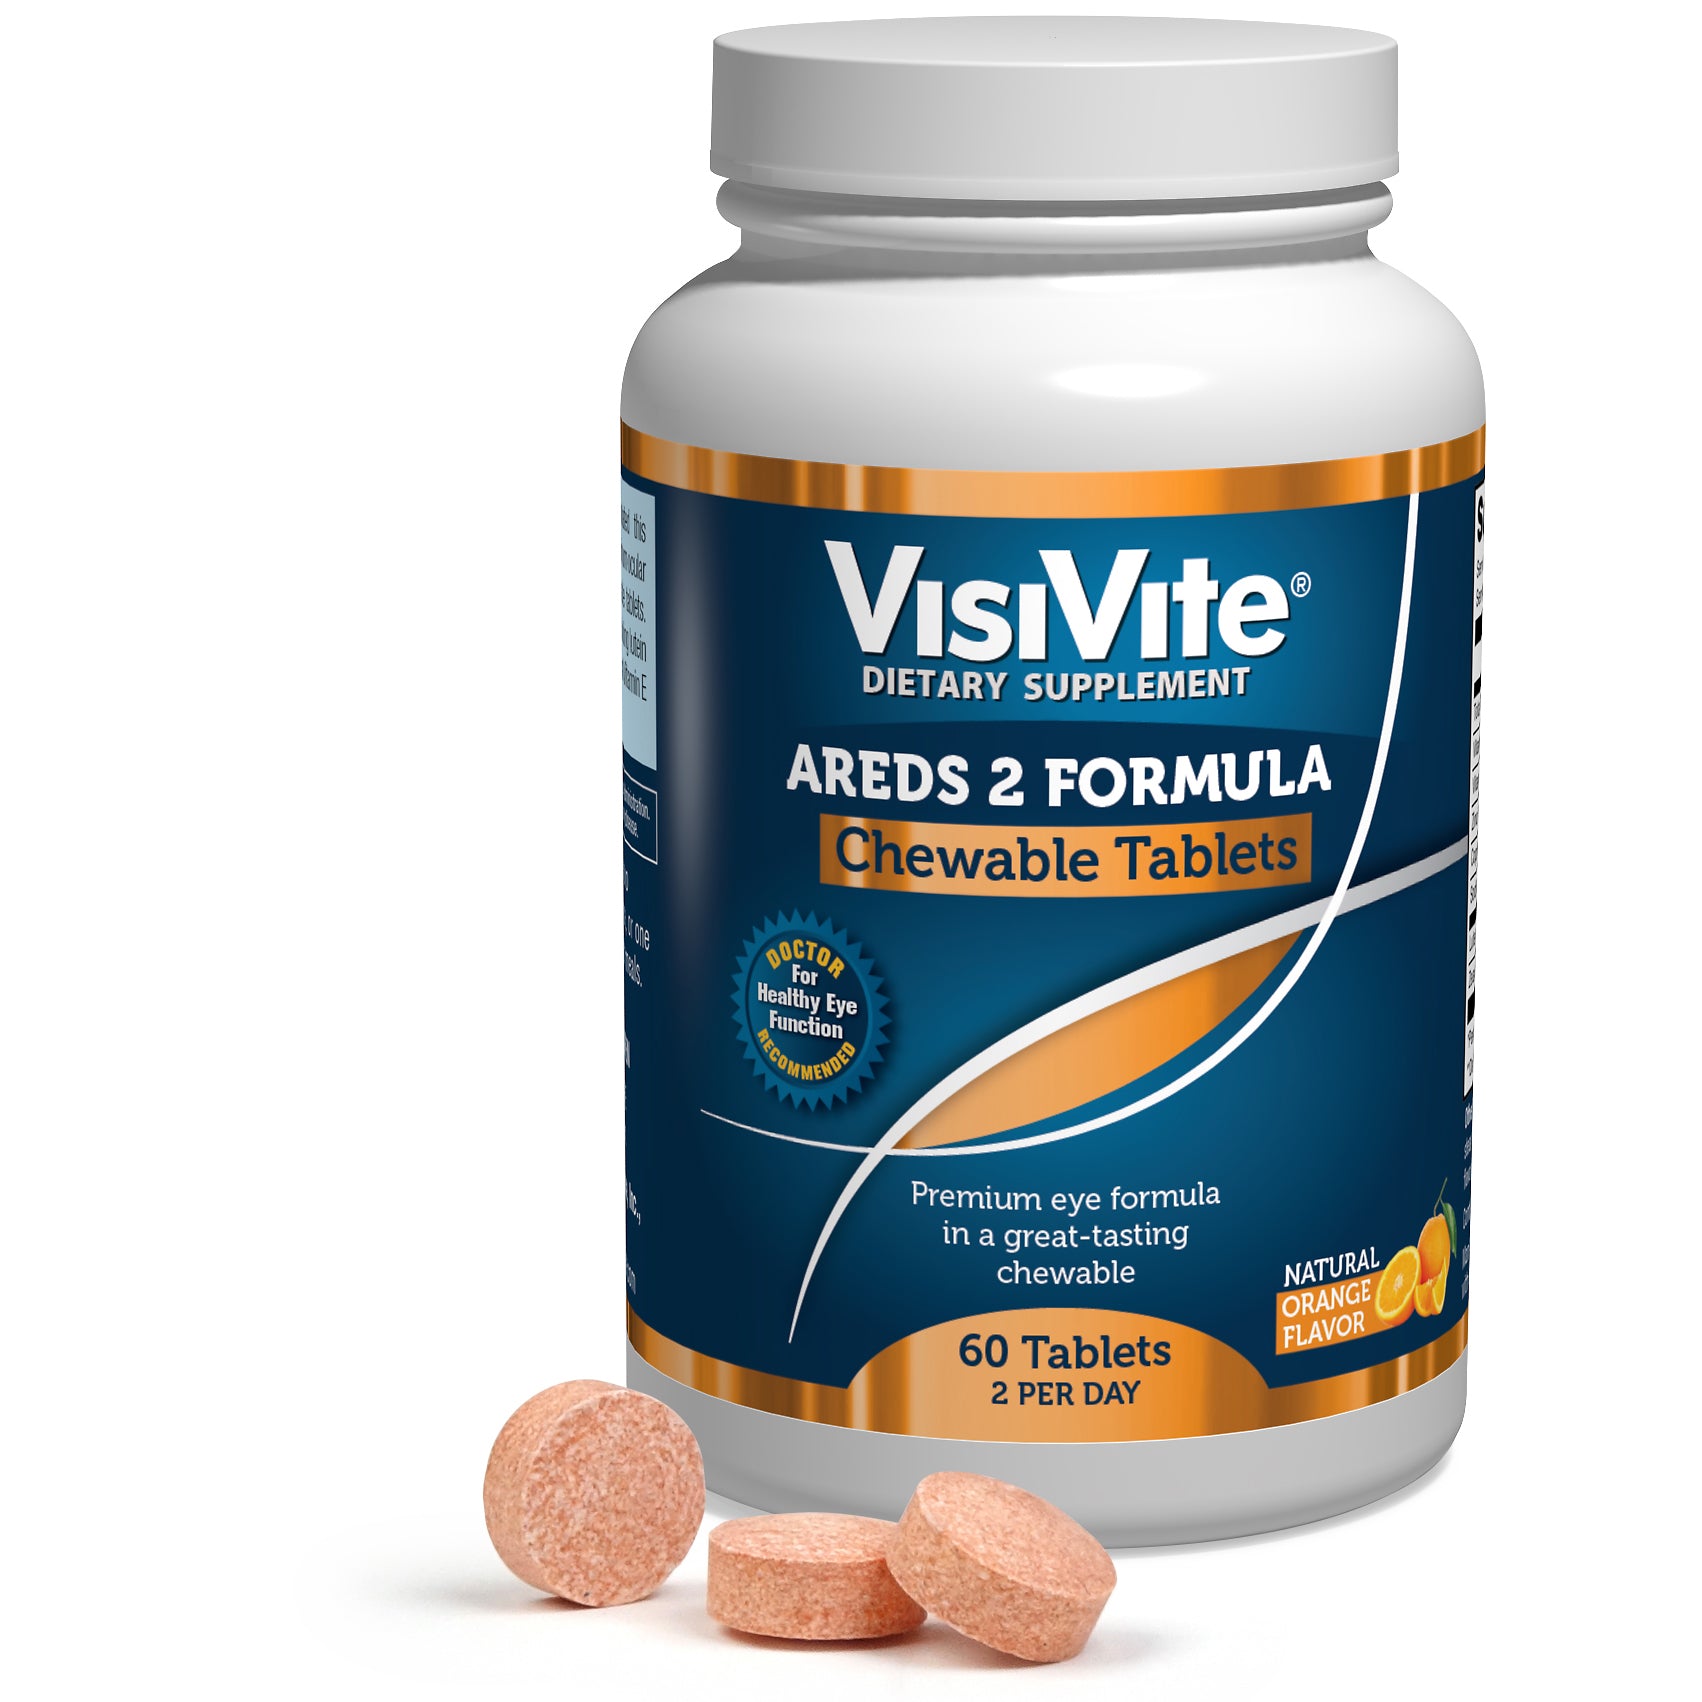 Vitamin Science Announces VisiVite Sugar-Free Chewable AREDS 2 Vitamins for Macular Degeneration